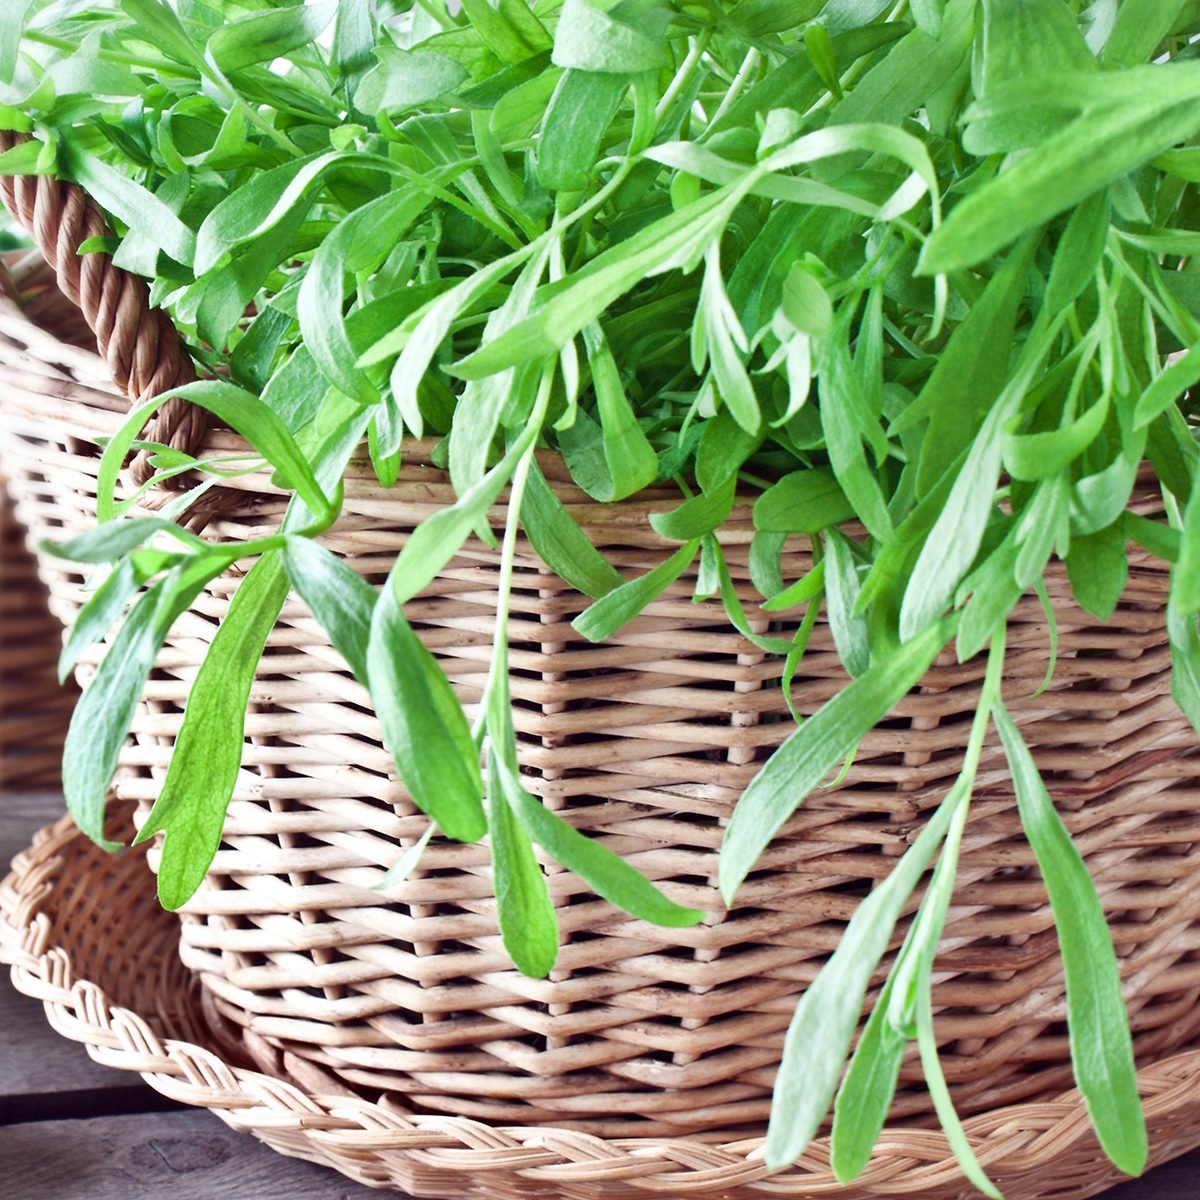 Tarragon fresh herbs and basket